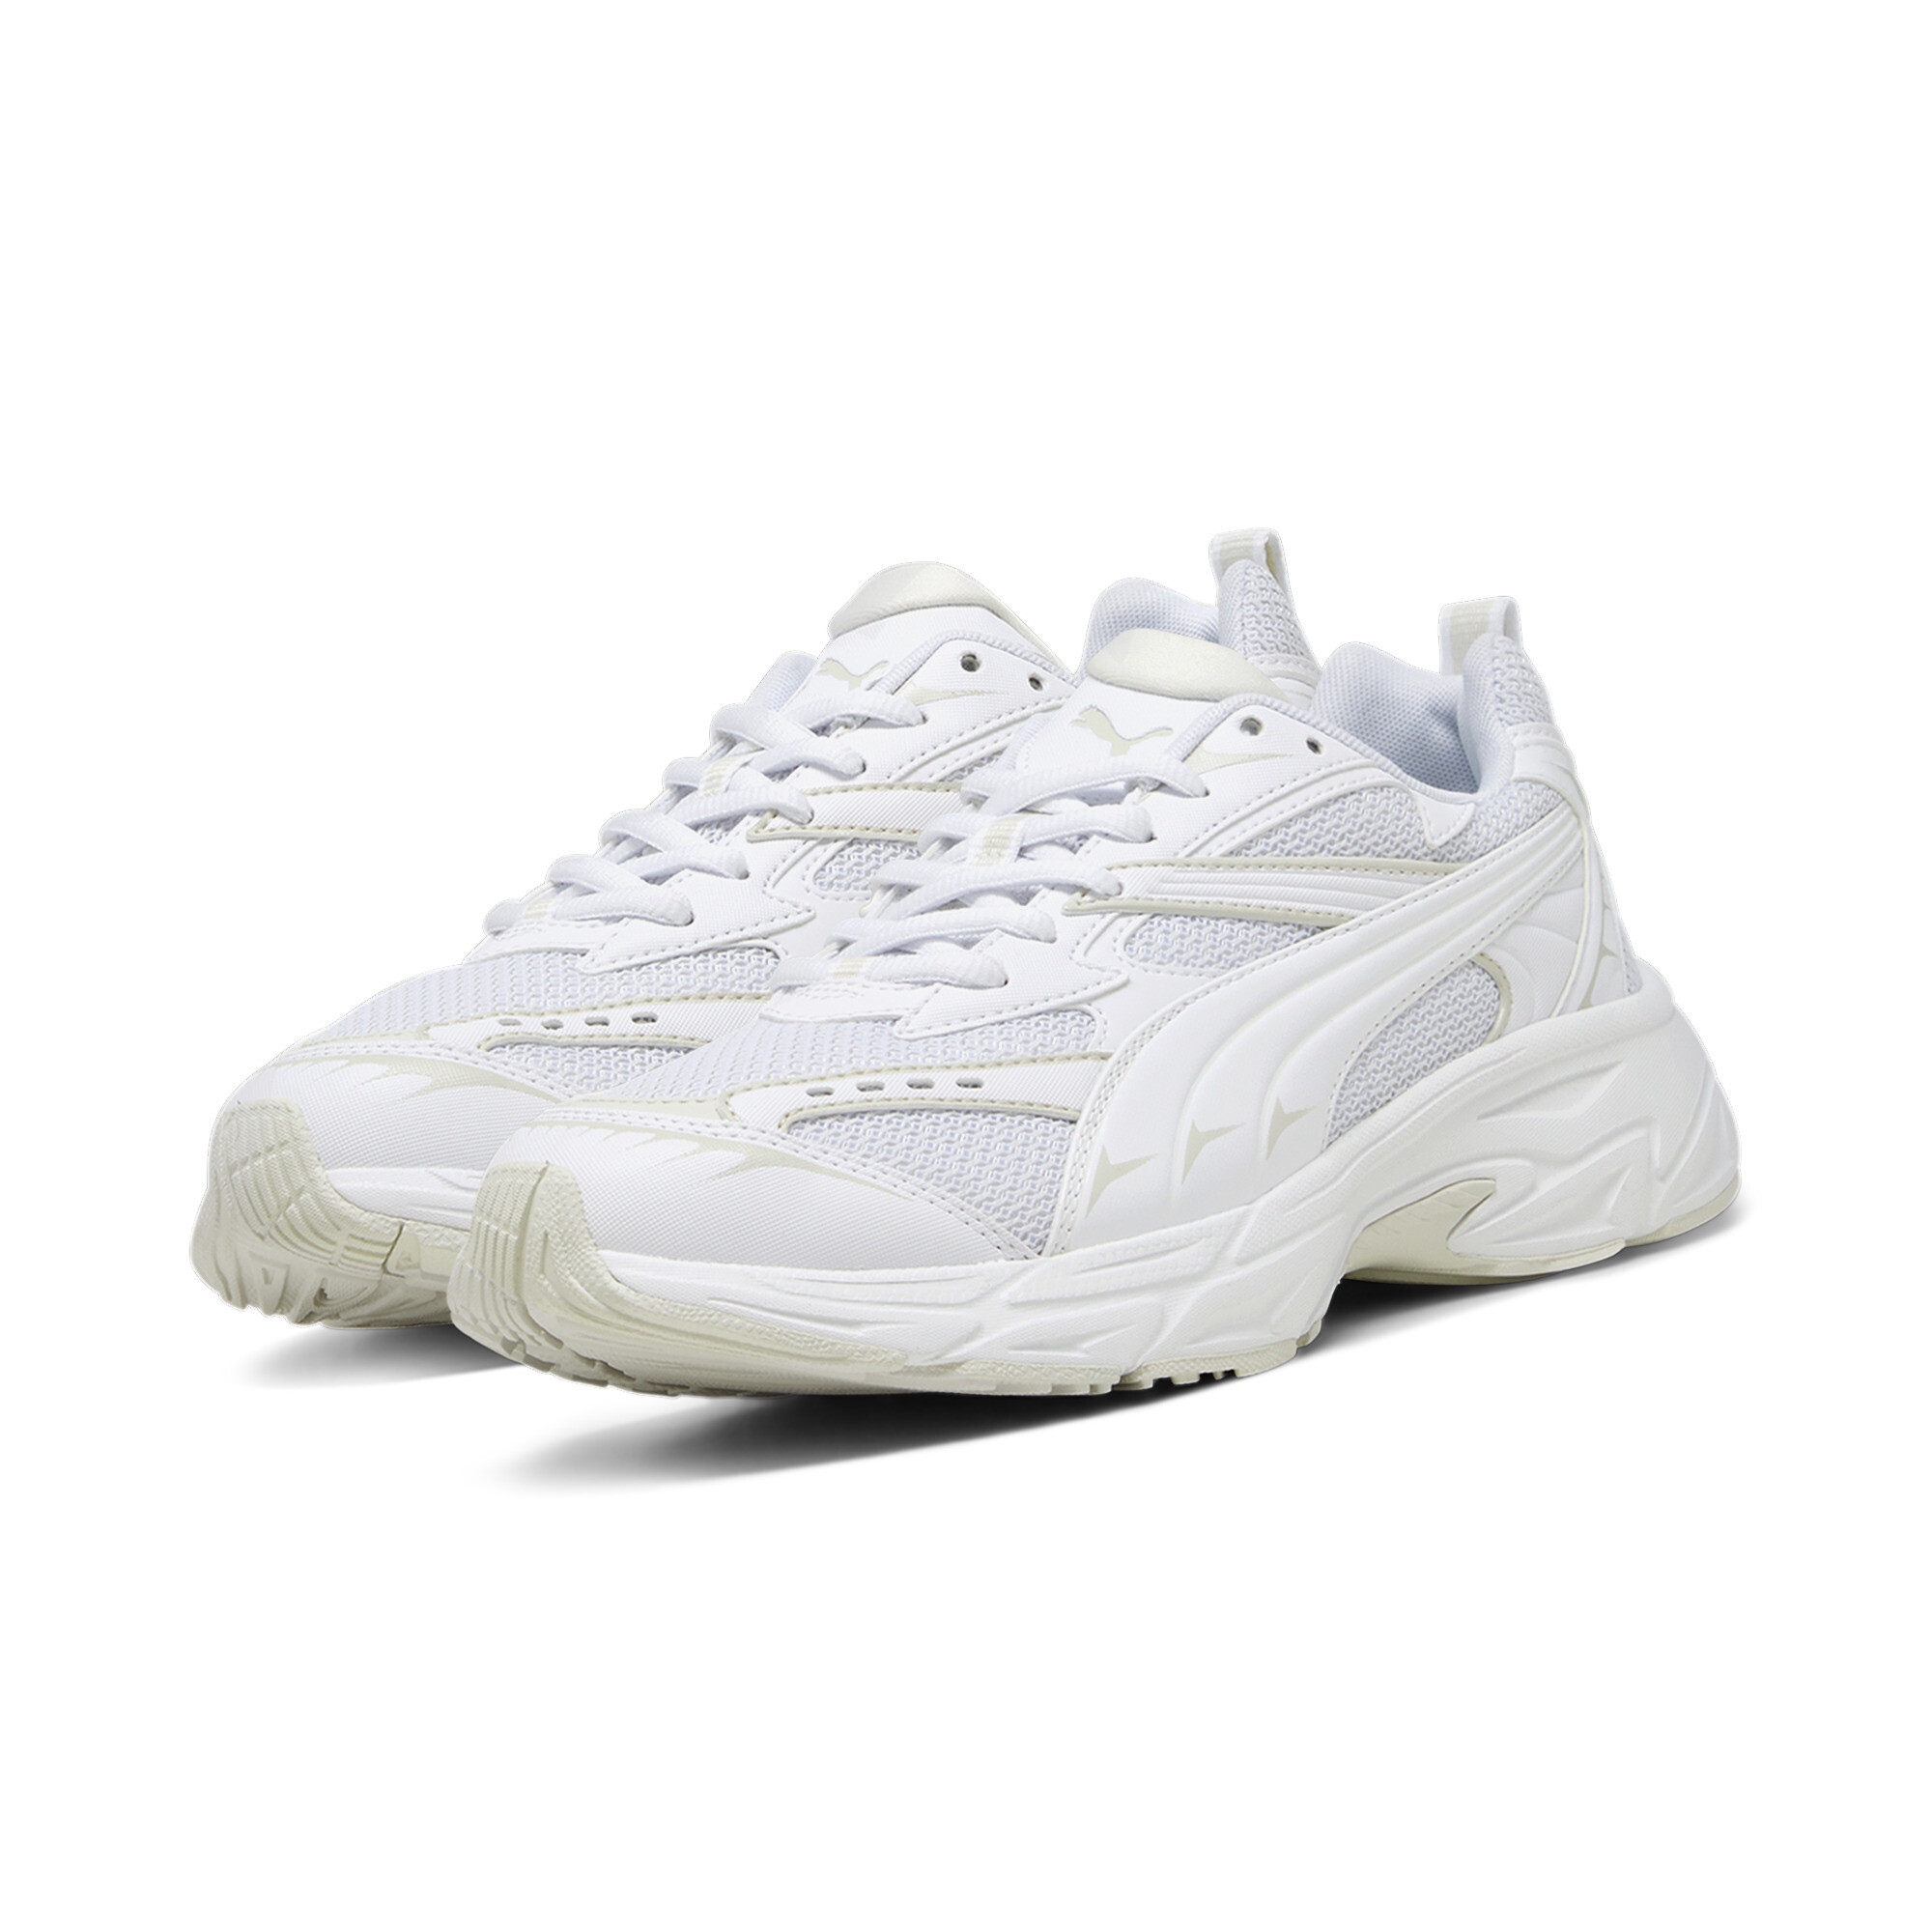 Men's PUMA Morphic Base Sneakers In White, Size EU 43